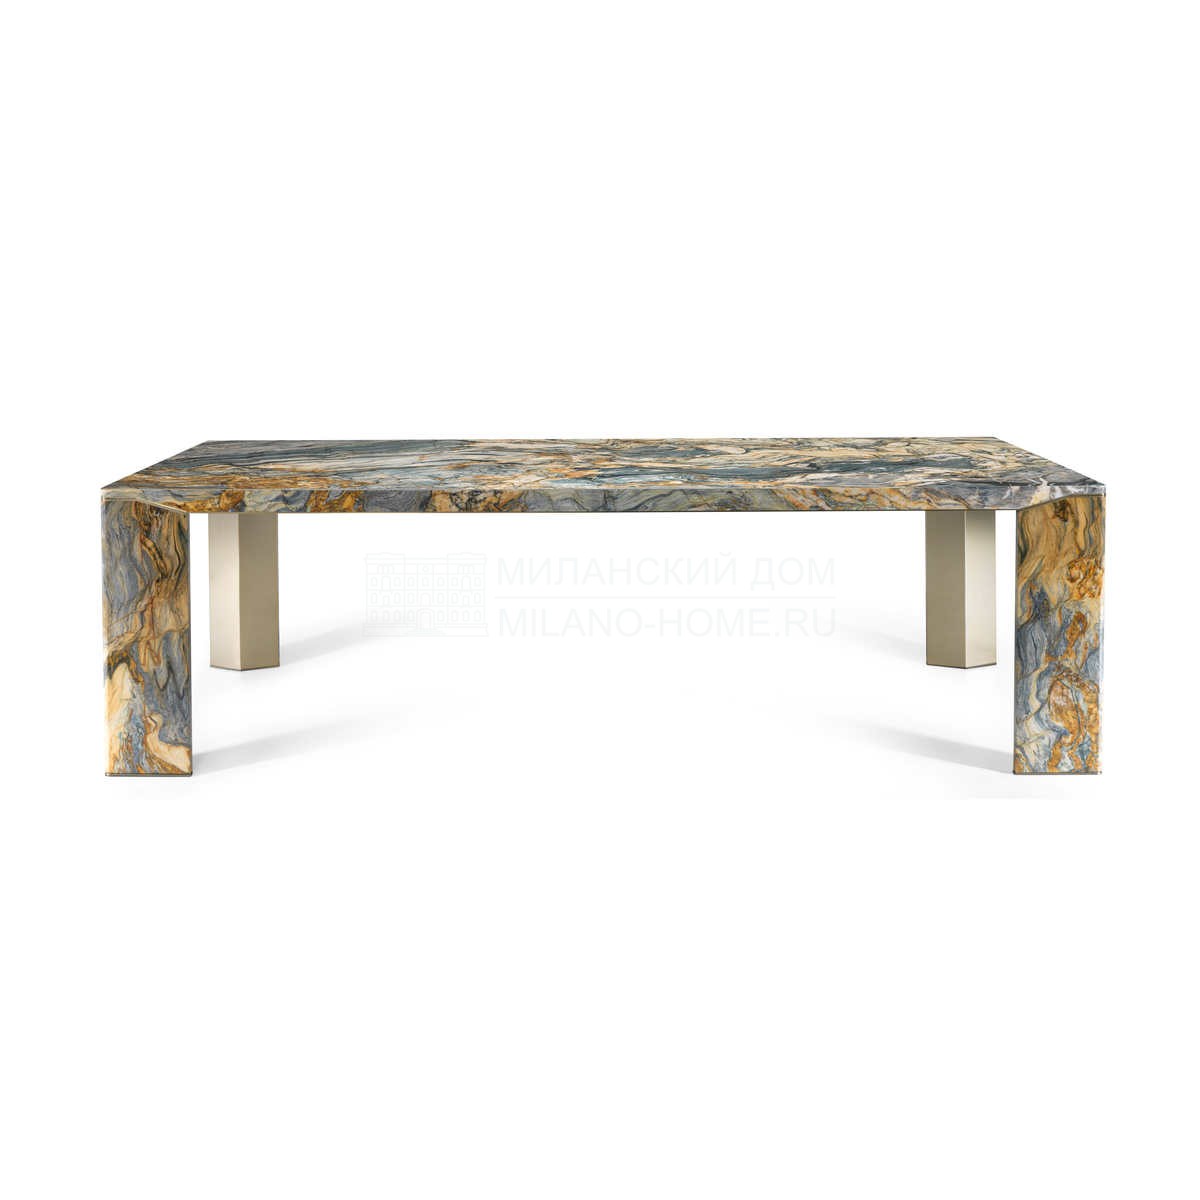 Обеденный стол Stone table из Италии фабрики IPE CAVALLI VISIONNAIRE